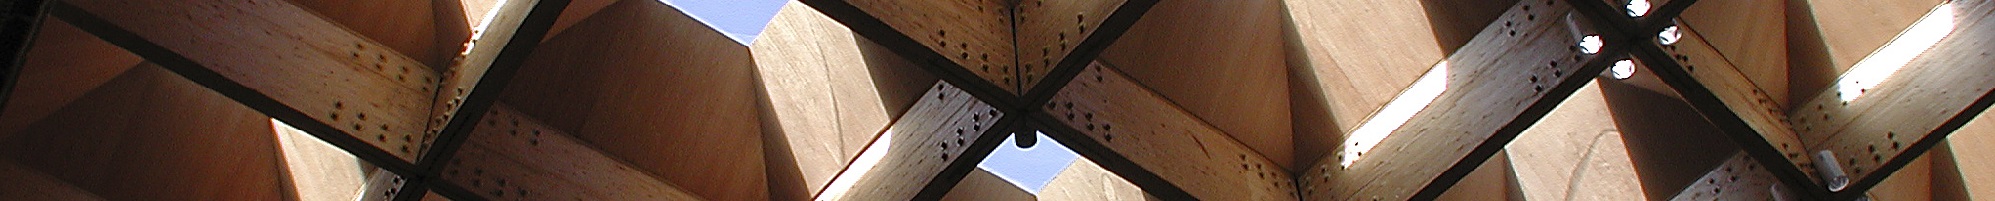 Patio techado de Carmen Calzado de la UAH 